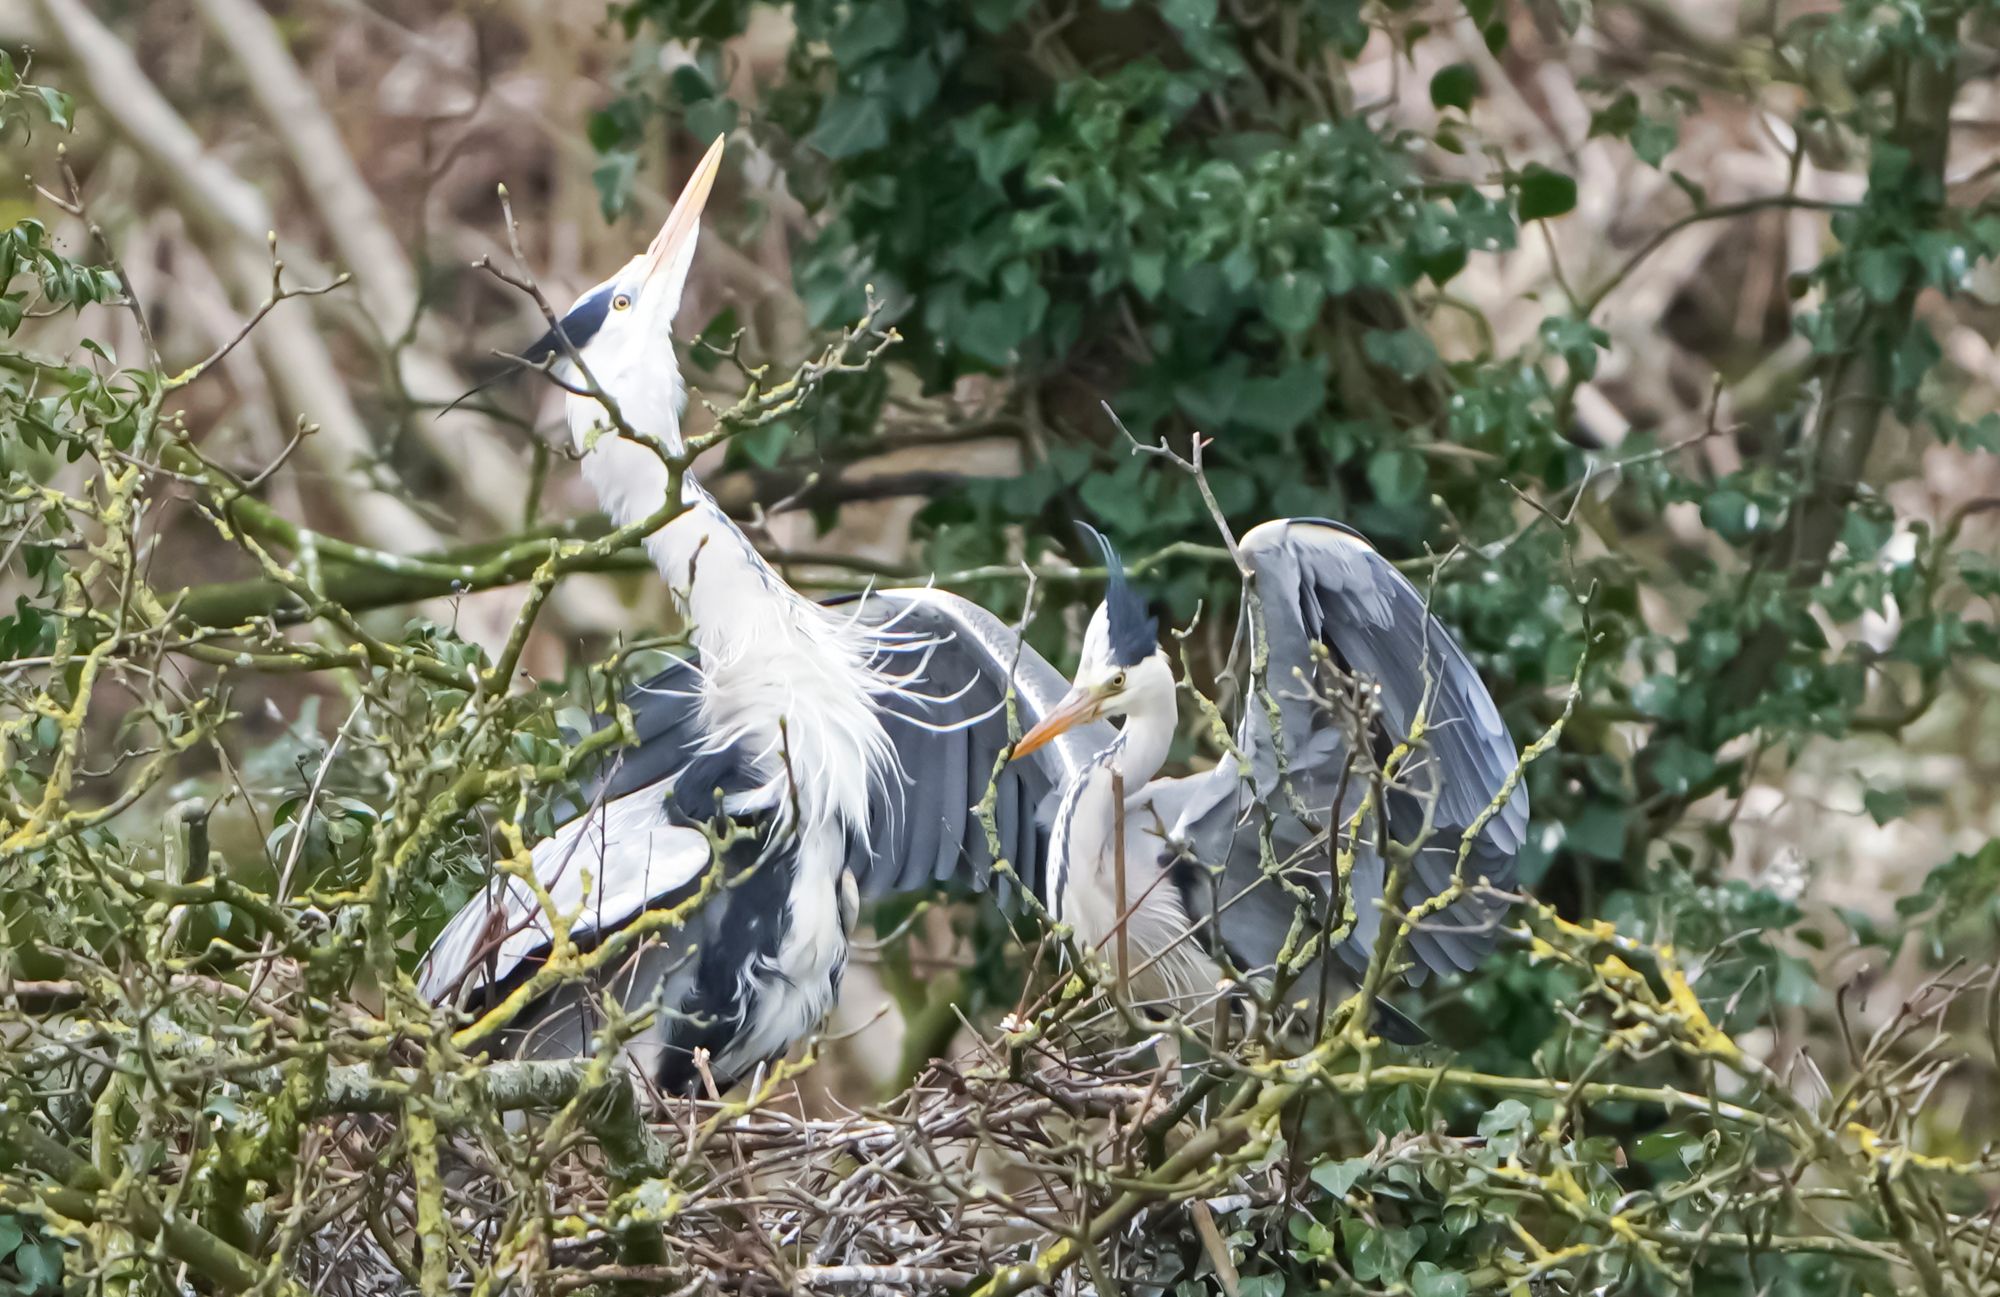 Heron Displaying on Nest by Martyn Fletcher, Flickr